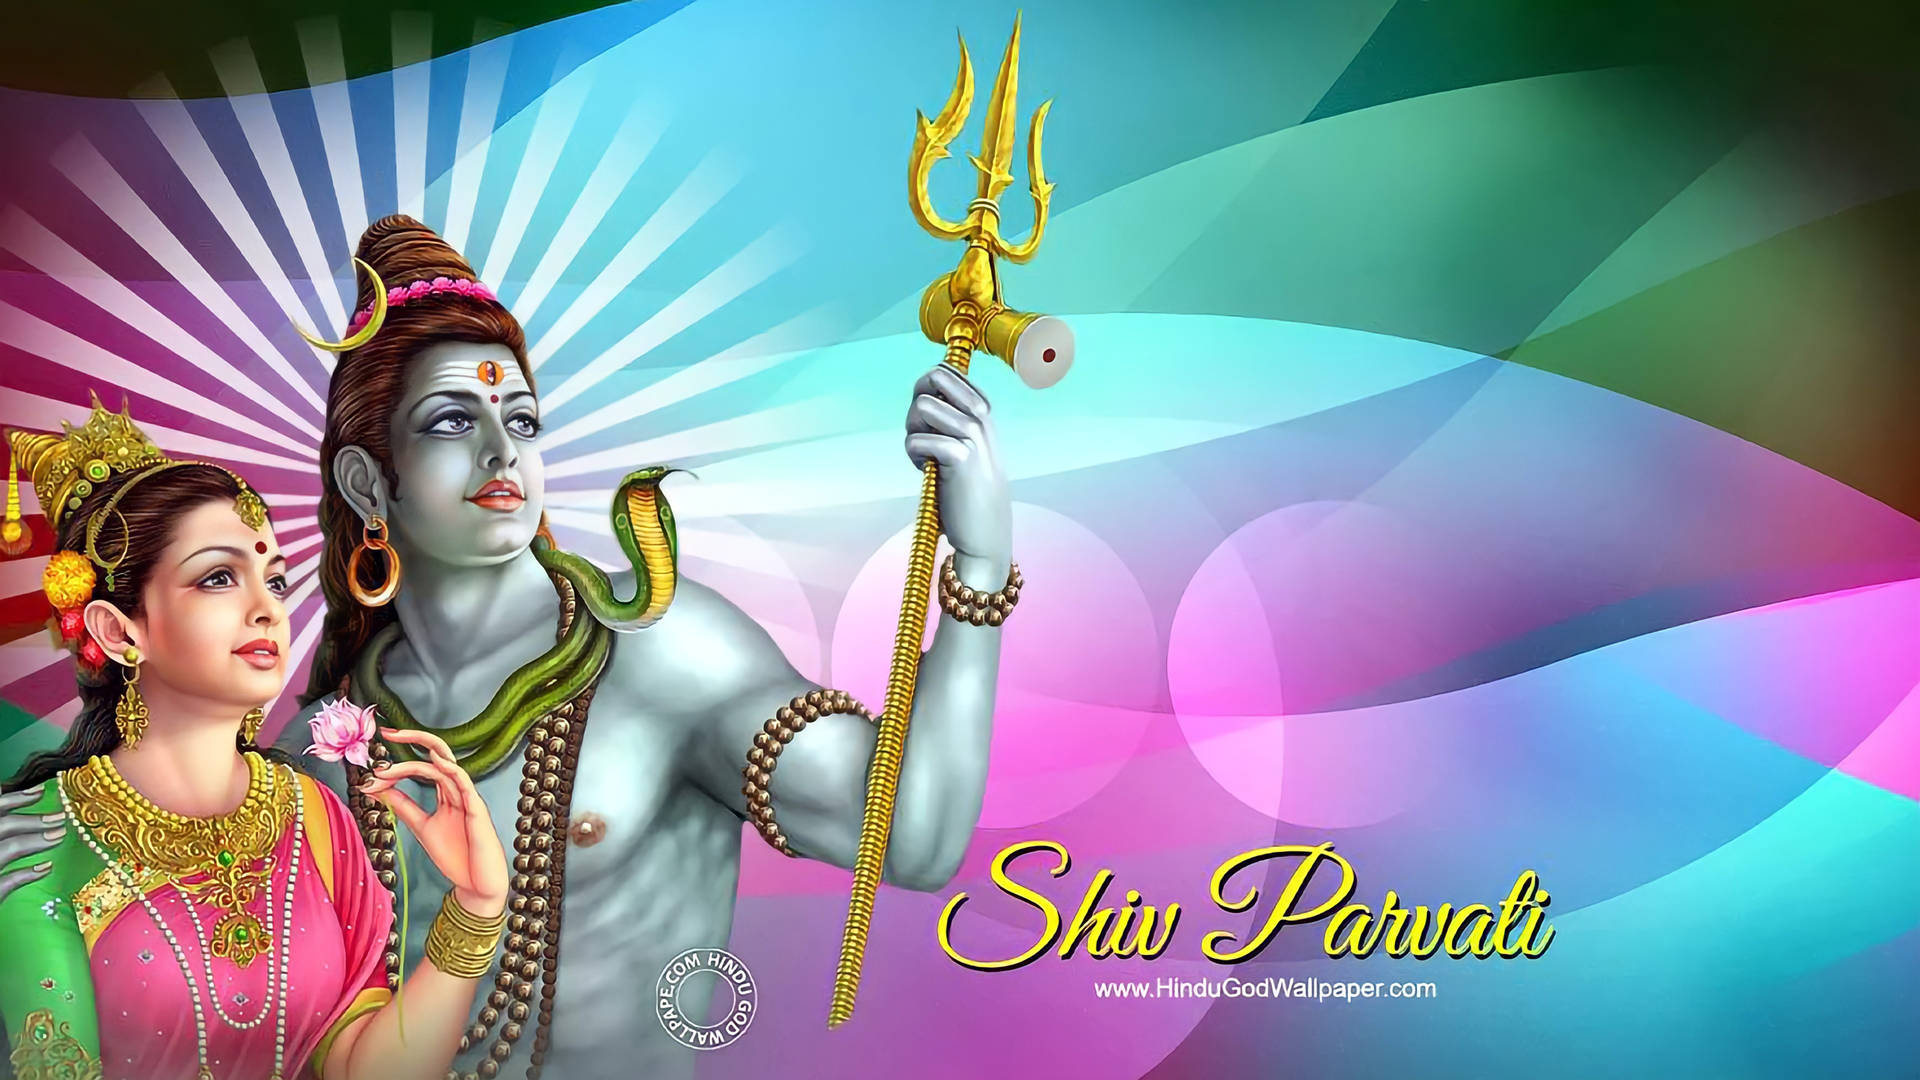 4142 Shiva Parvati Images Stock Photos  Vectors  Shutterstock